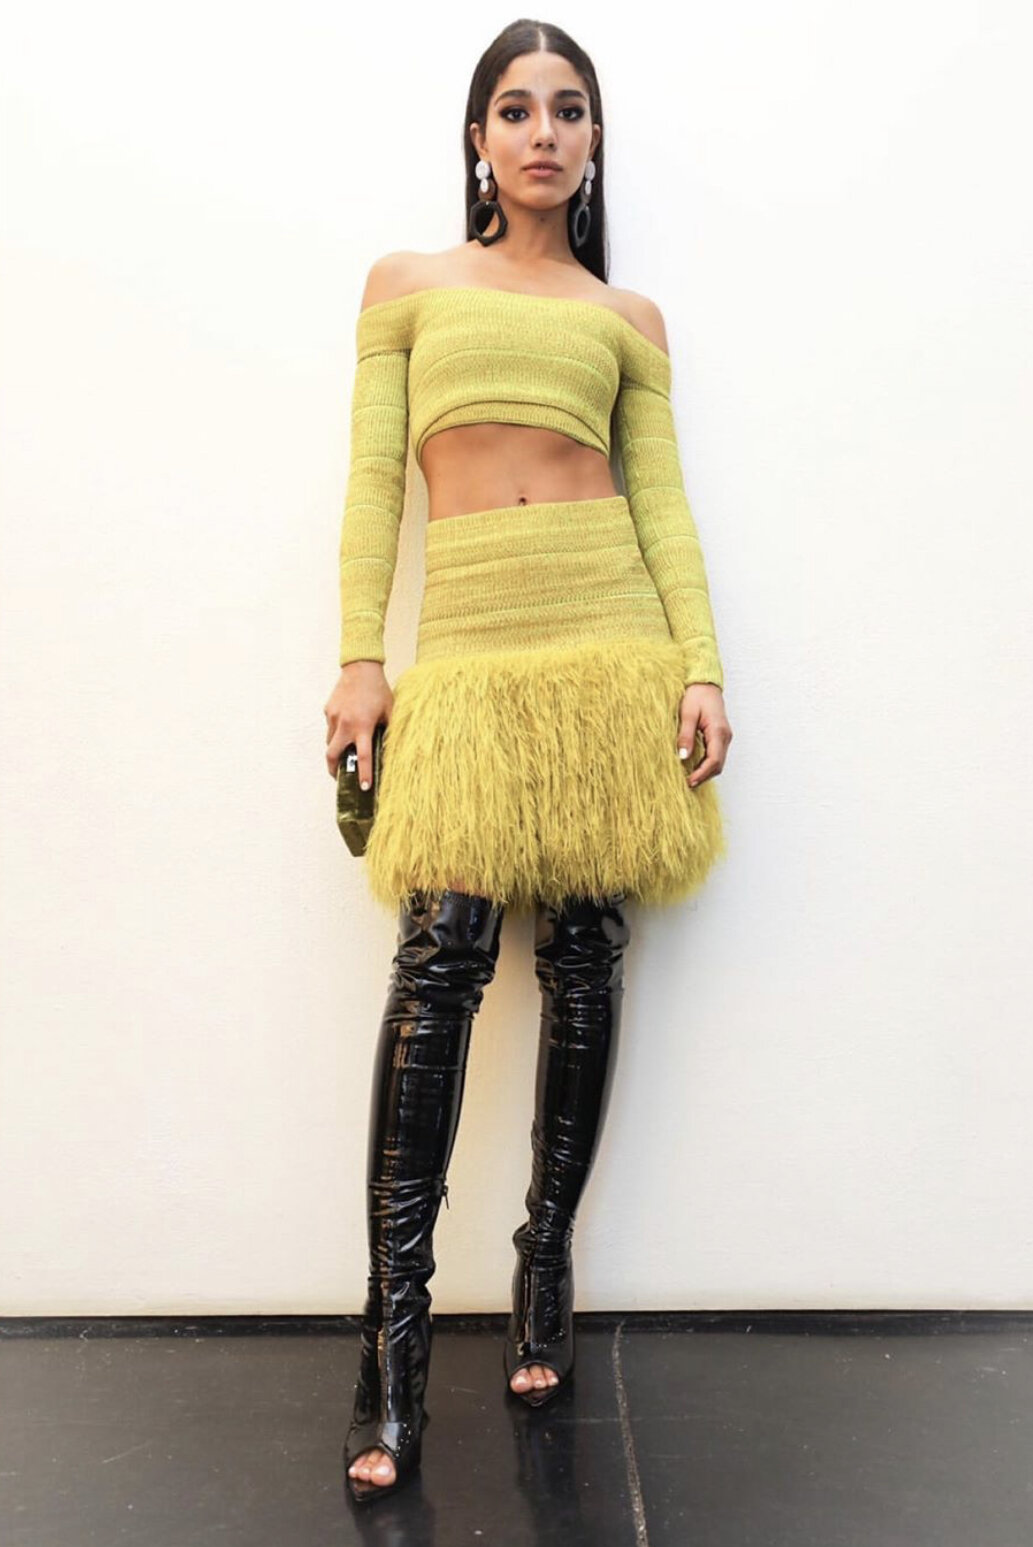  Yovanna Ventura at New York Fashion Week     styled by Vance Gamble  